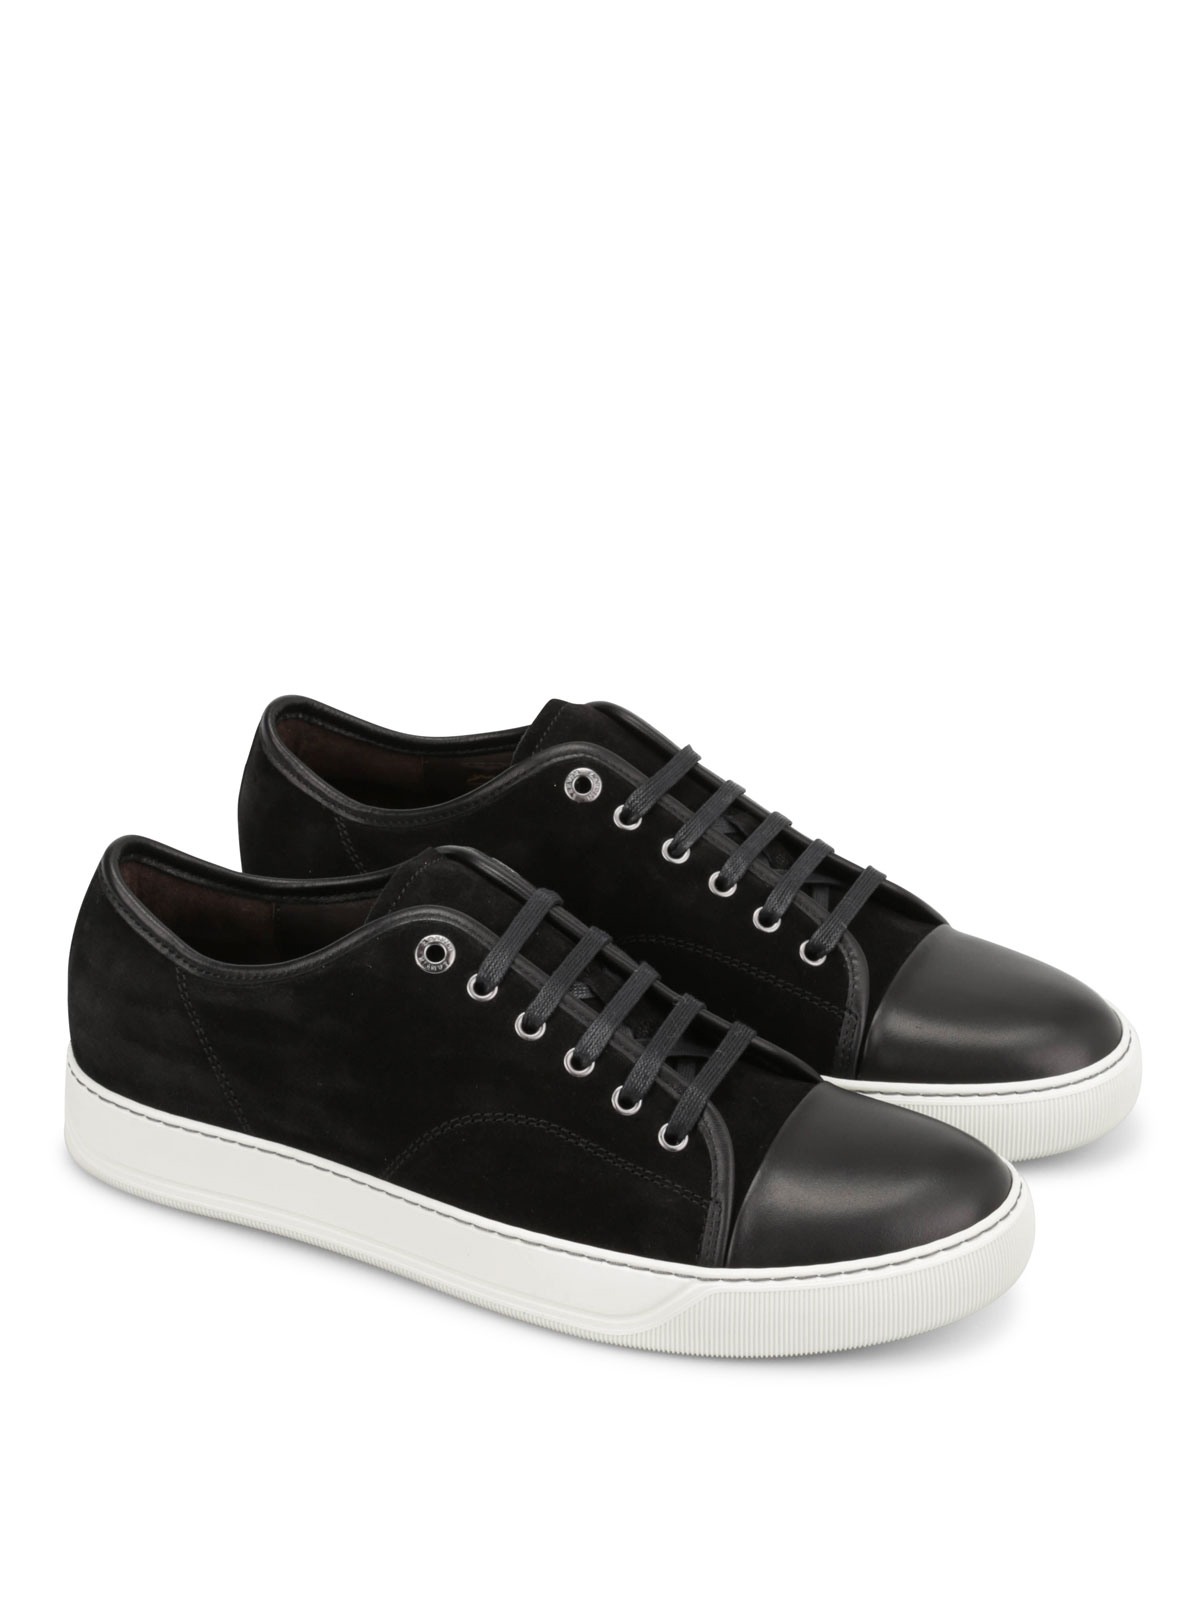 Lanvin Black Suede & Patent Leather Dbb1 Sneakers | ModeSens